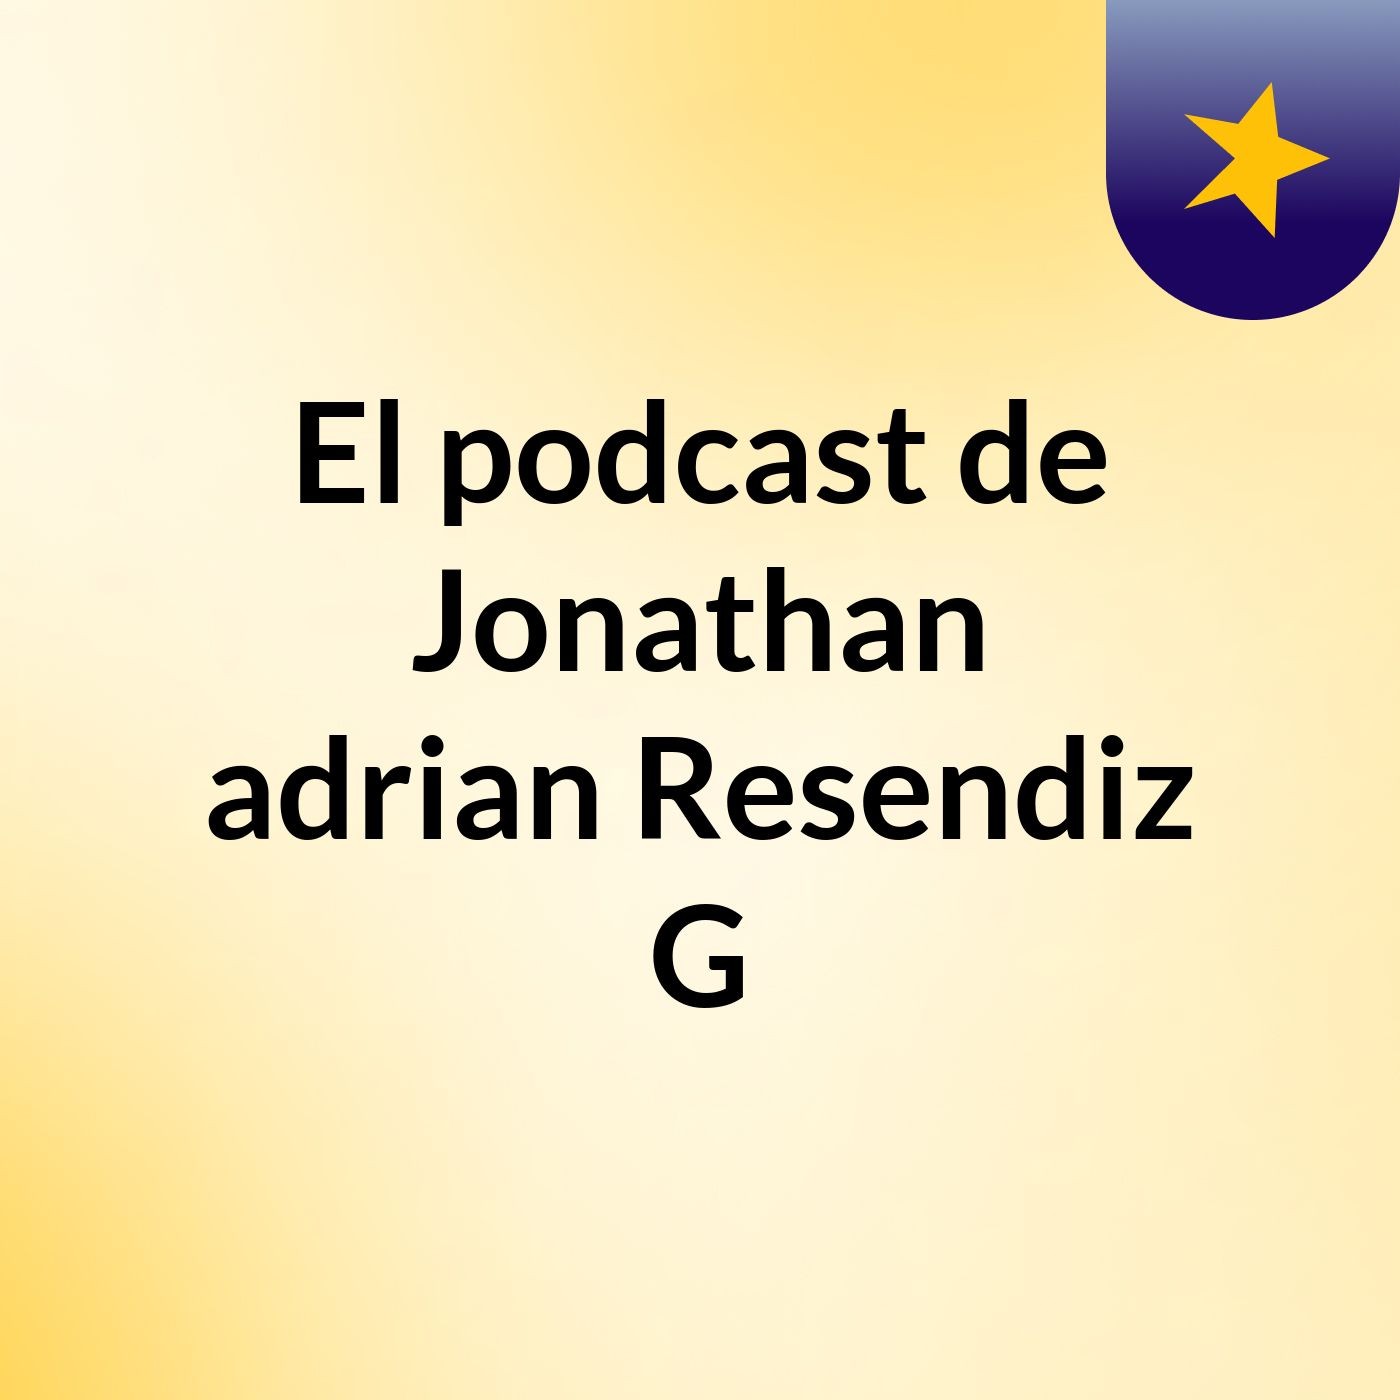 Episodio 4 - El podcast de Jonathan adrian Resendiz G